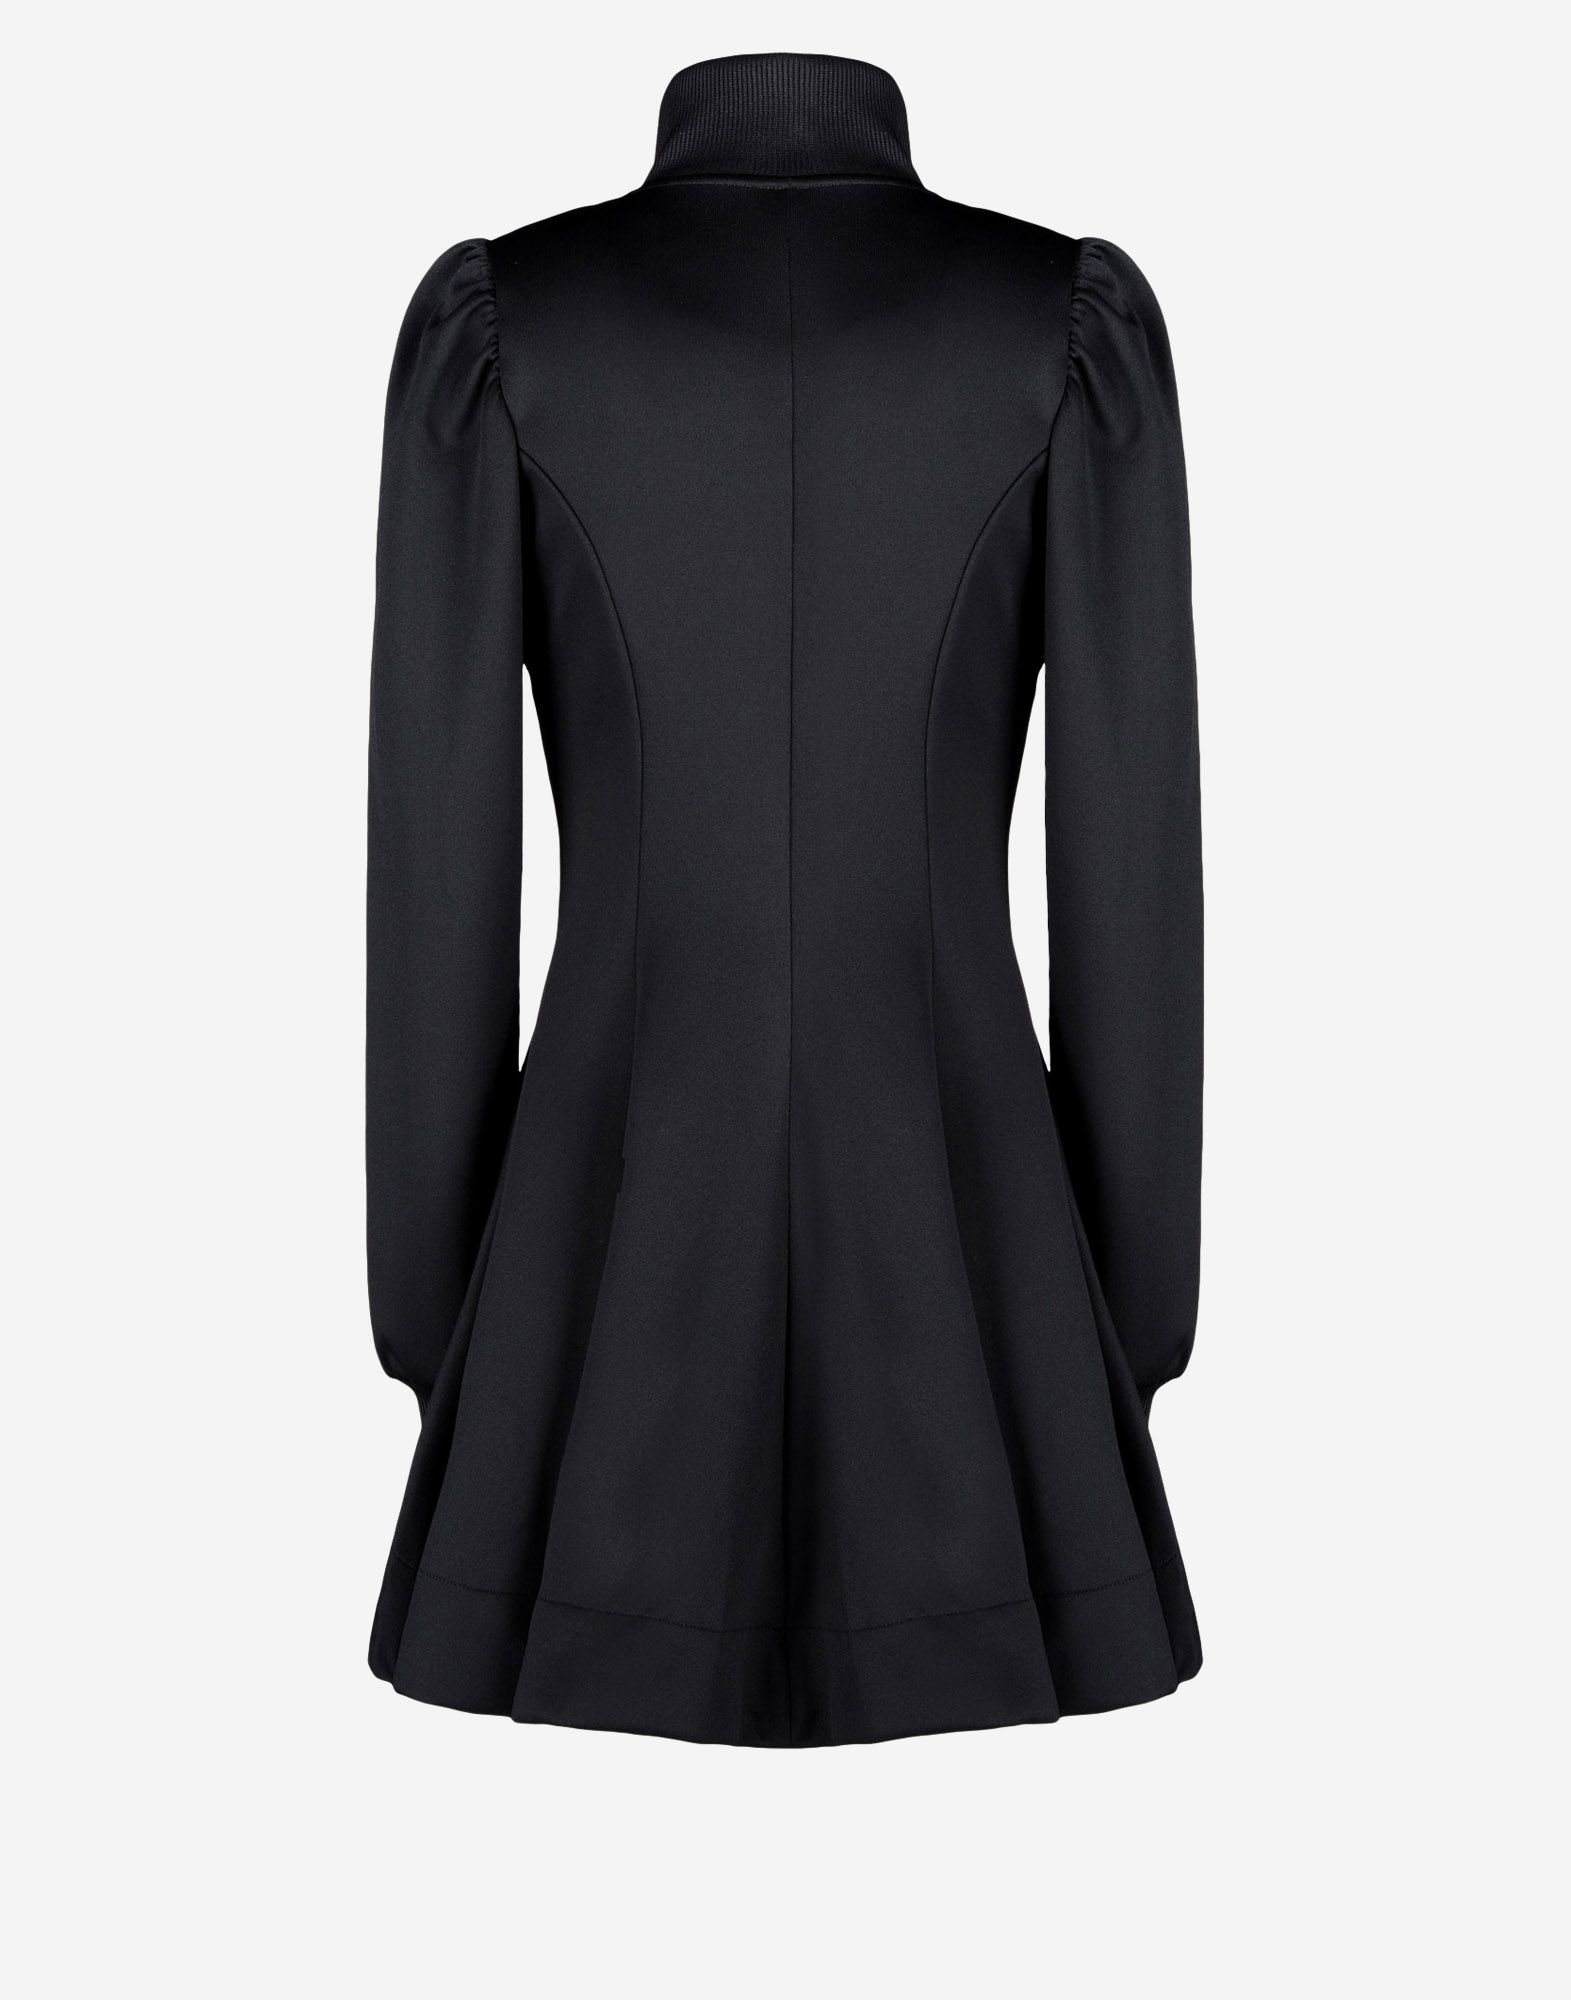 Roland Garros Y 3 Premium Jacket for Women | Adidas Y-3 Official Store